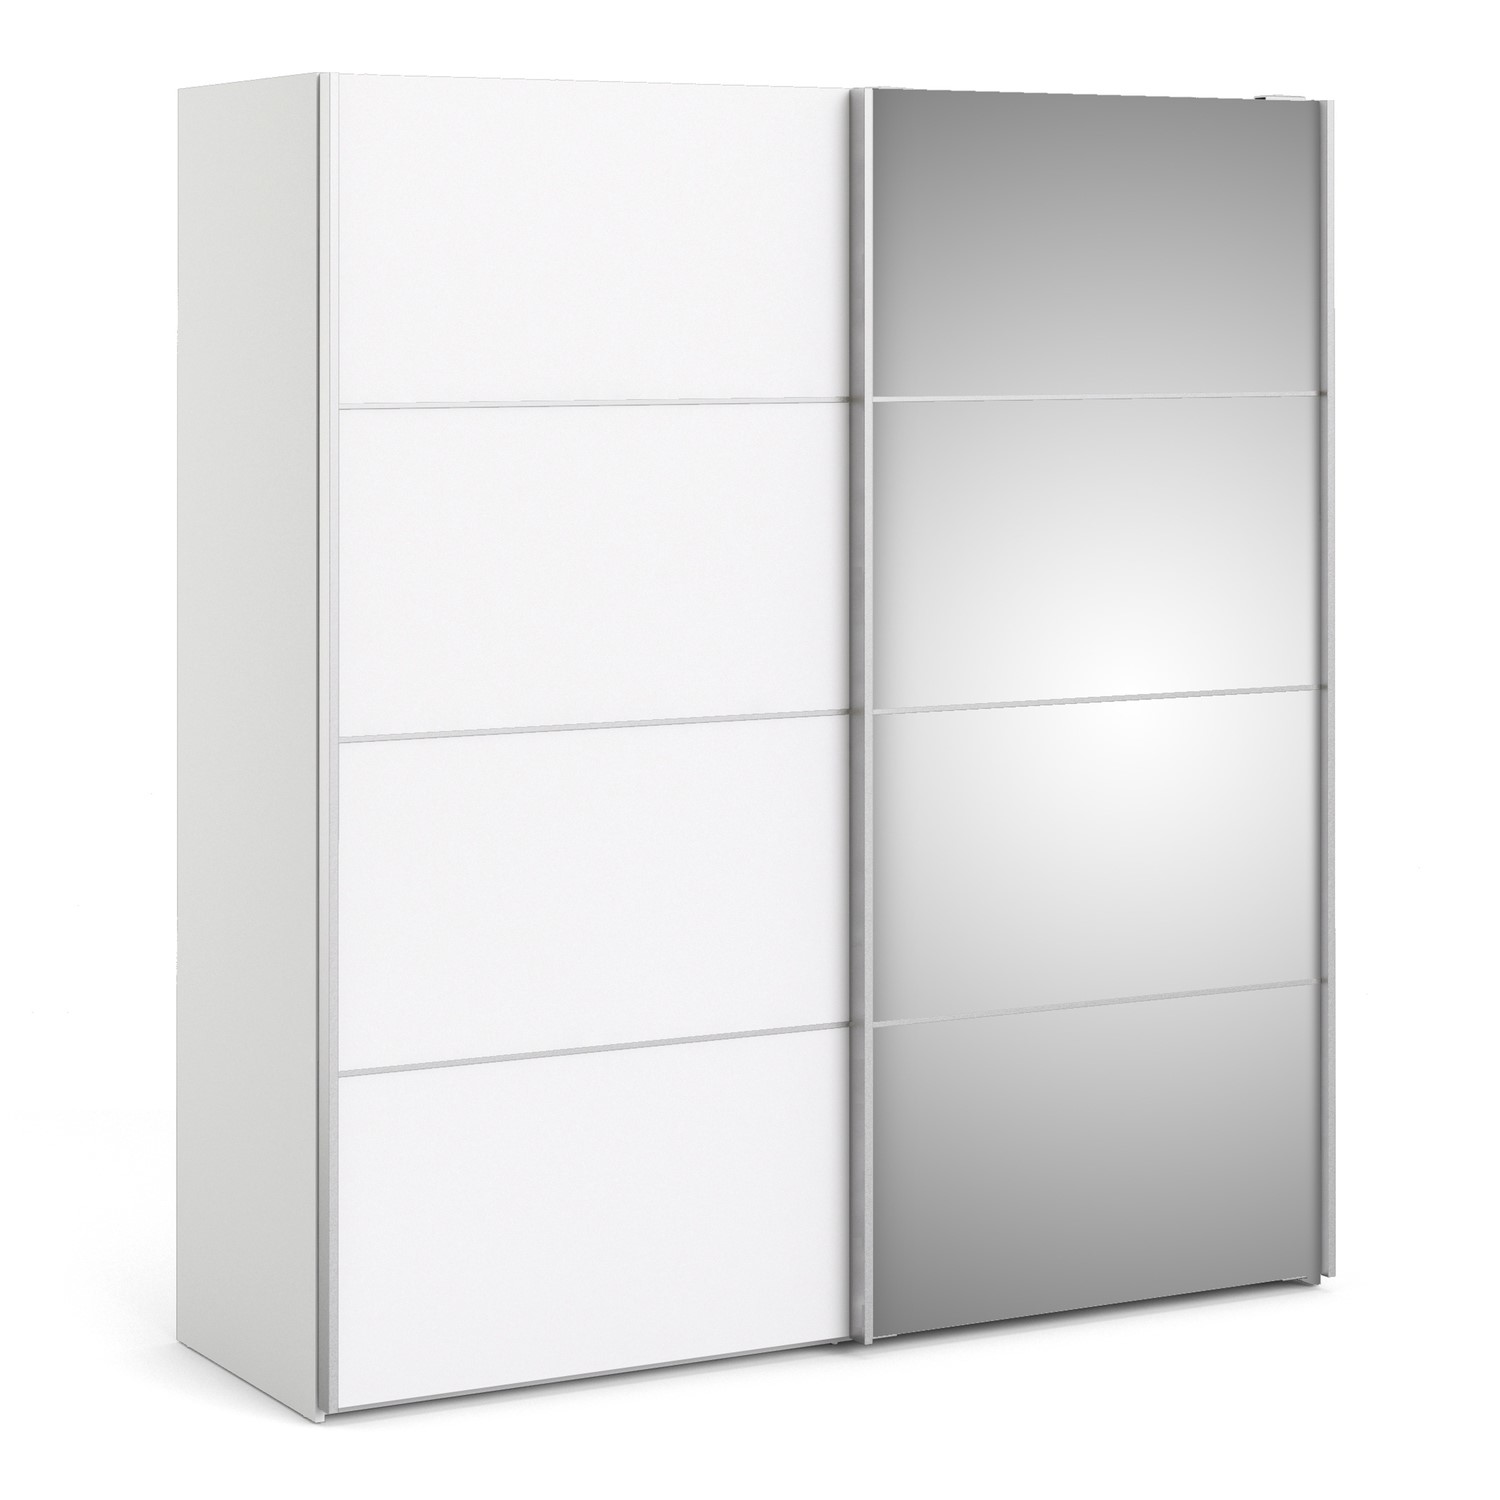 Photo of Tall white 2 door sliding mirrored wardrobe - verona